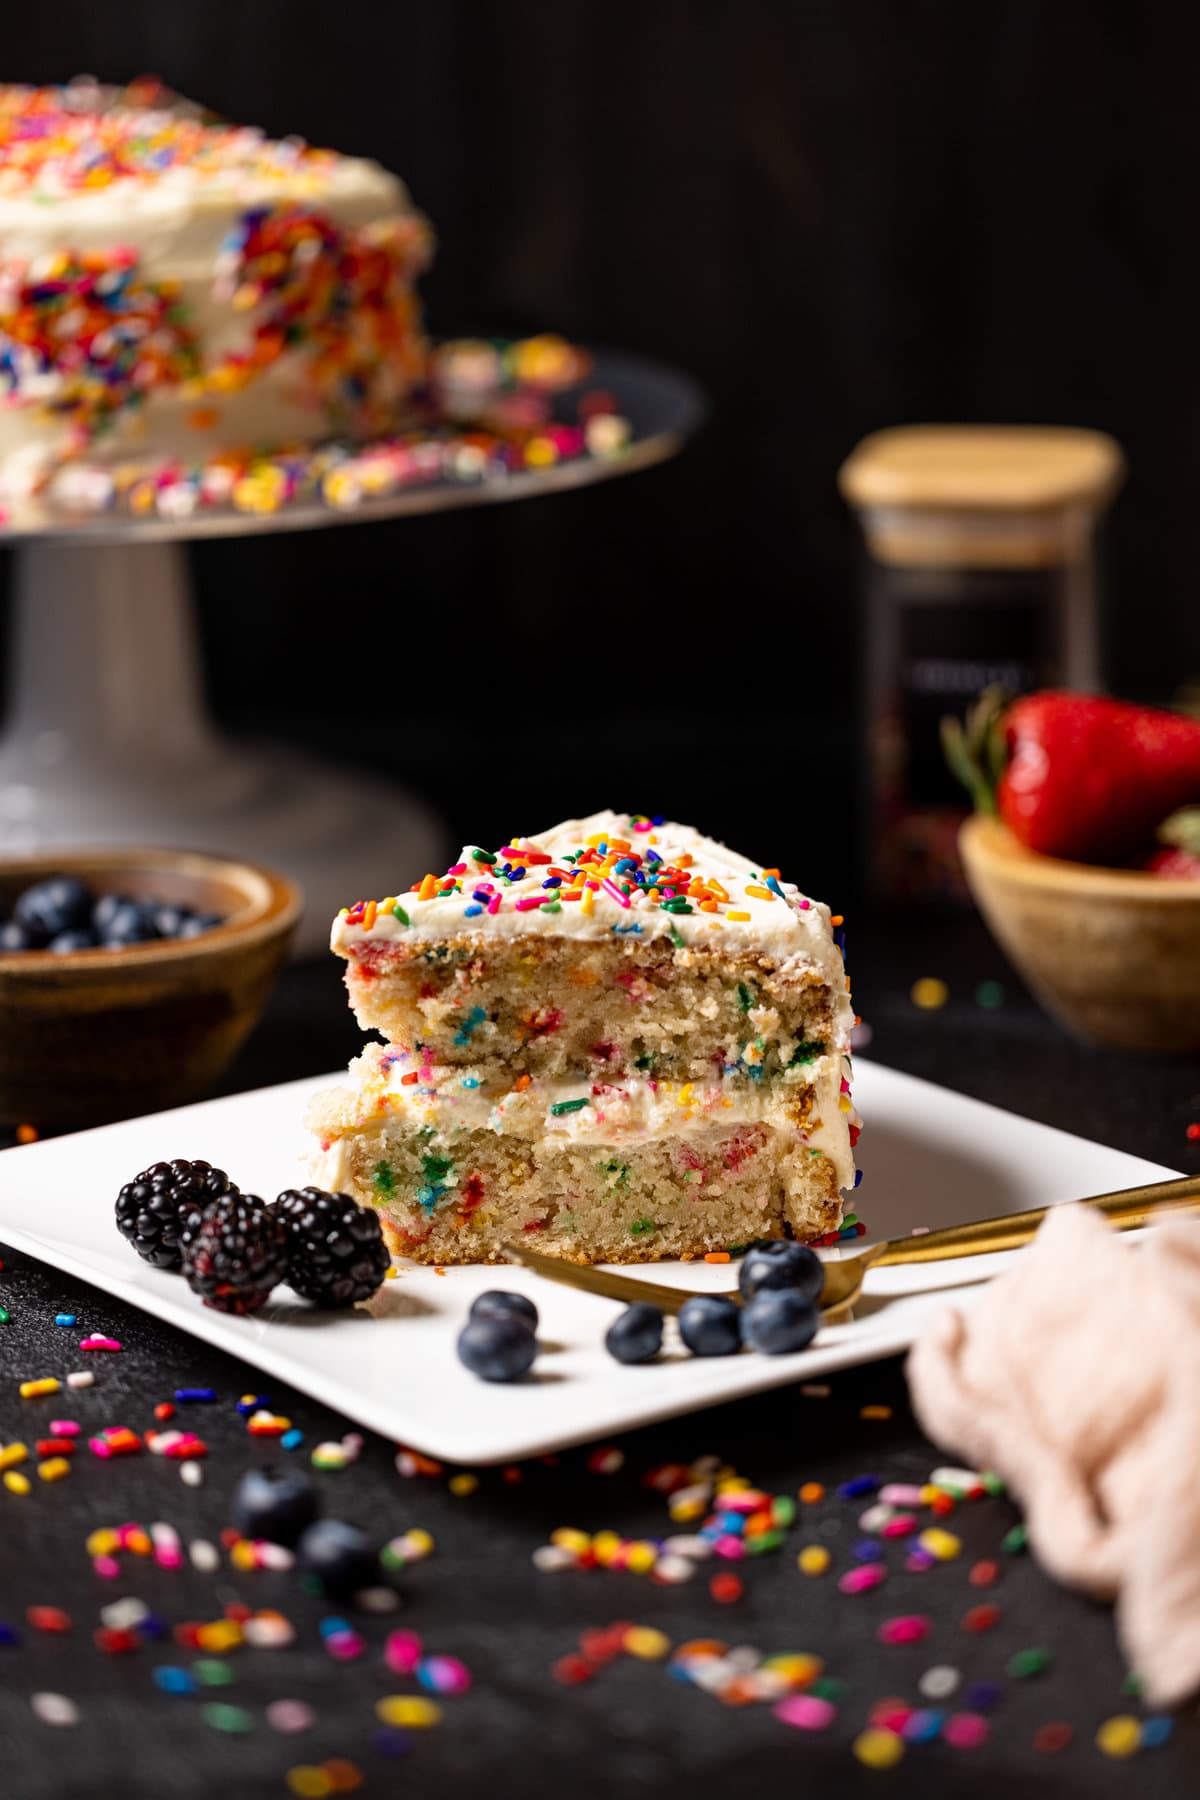 Slice of Vegan Funfetti Cake with Vanilla Buttercream near berries